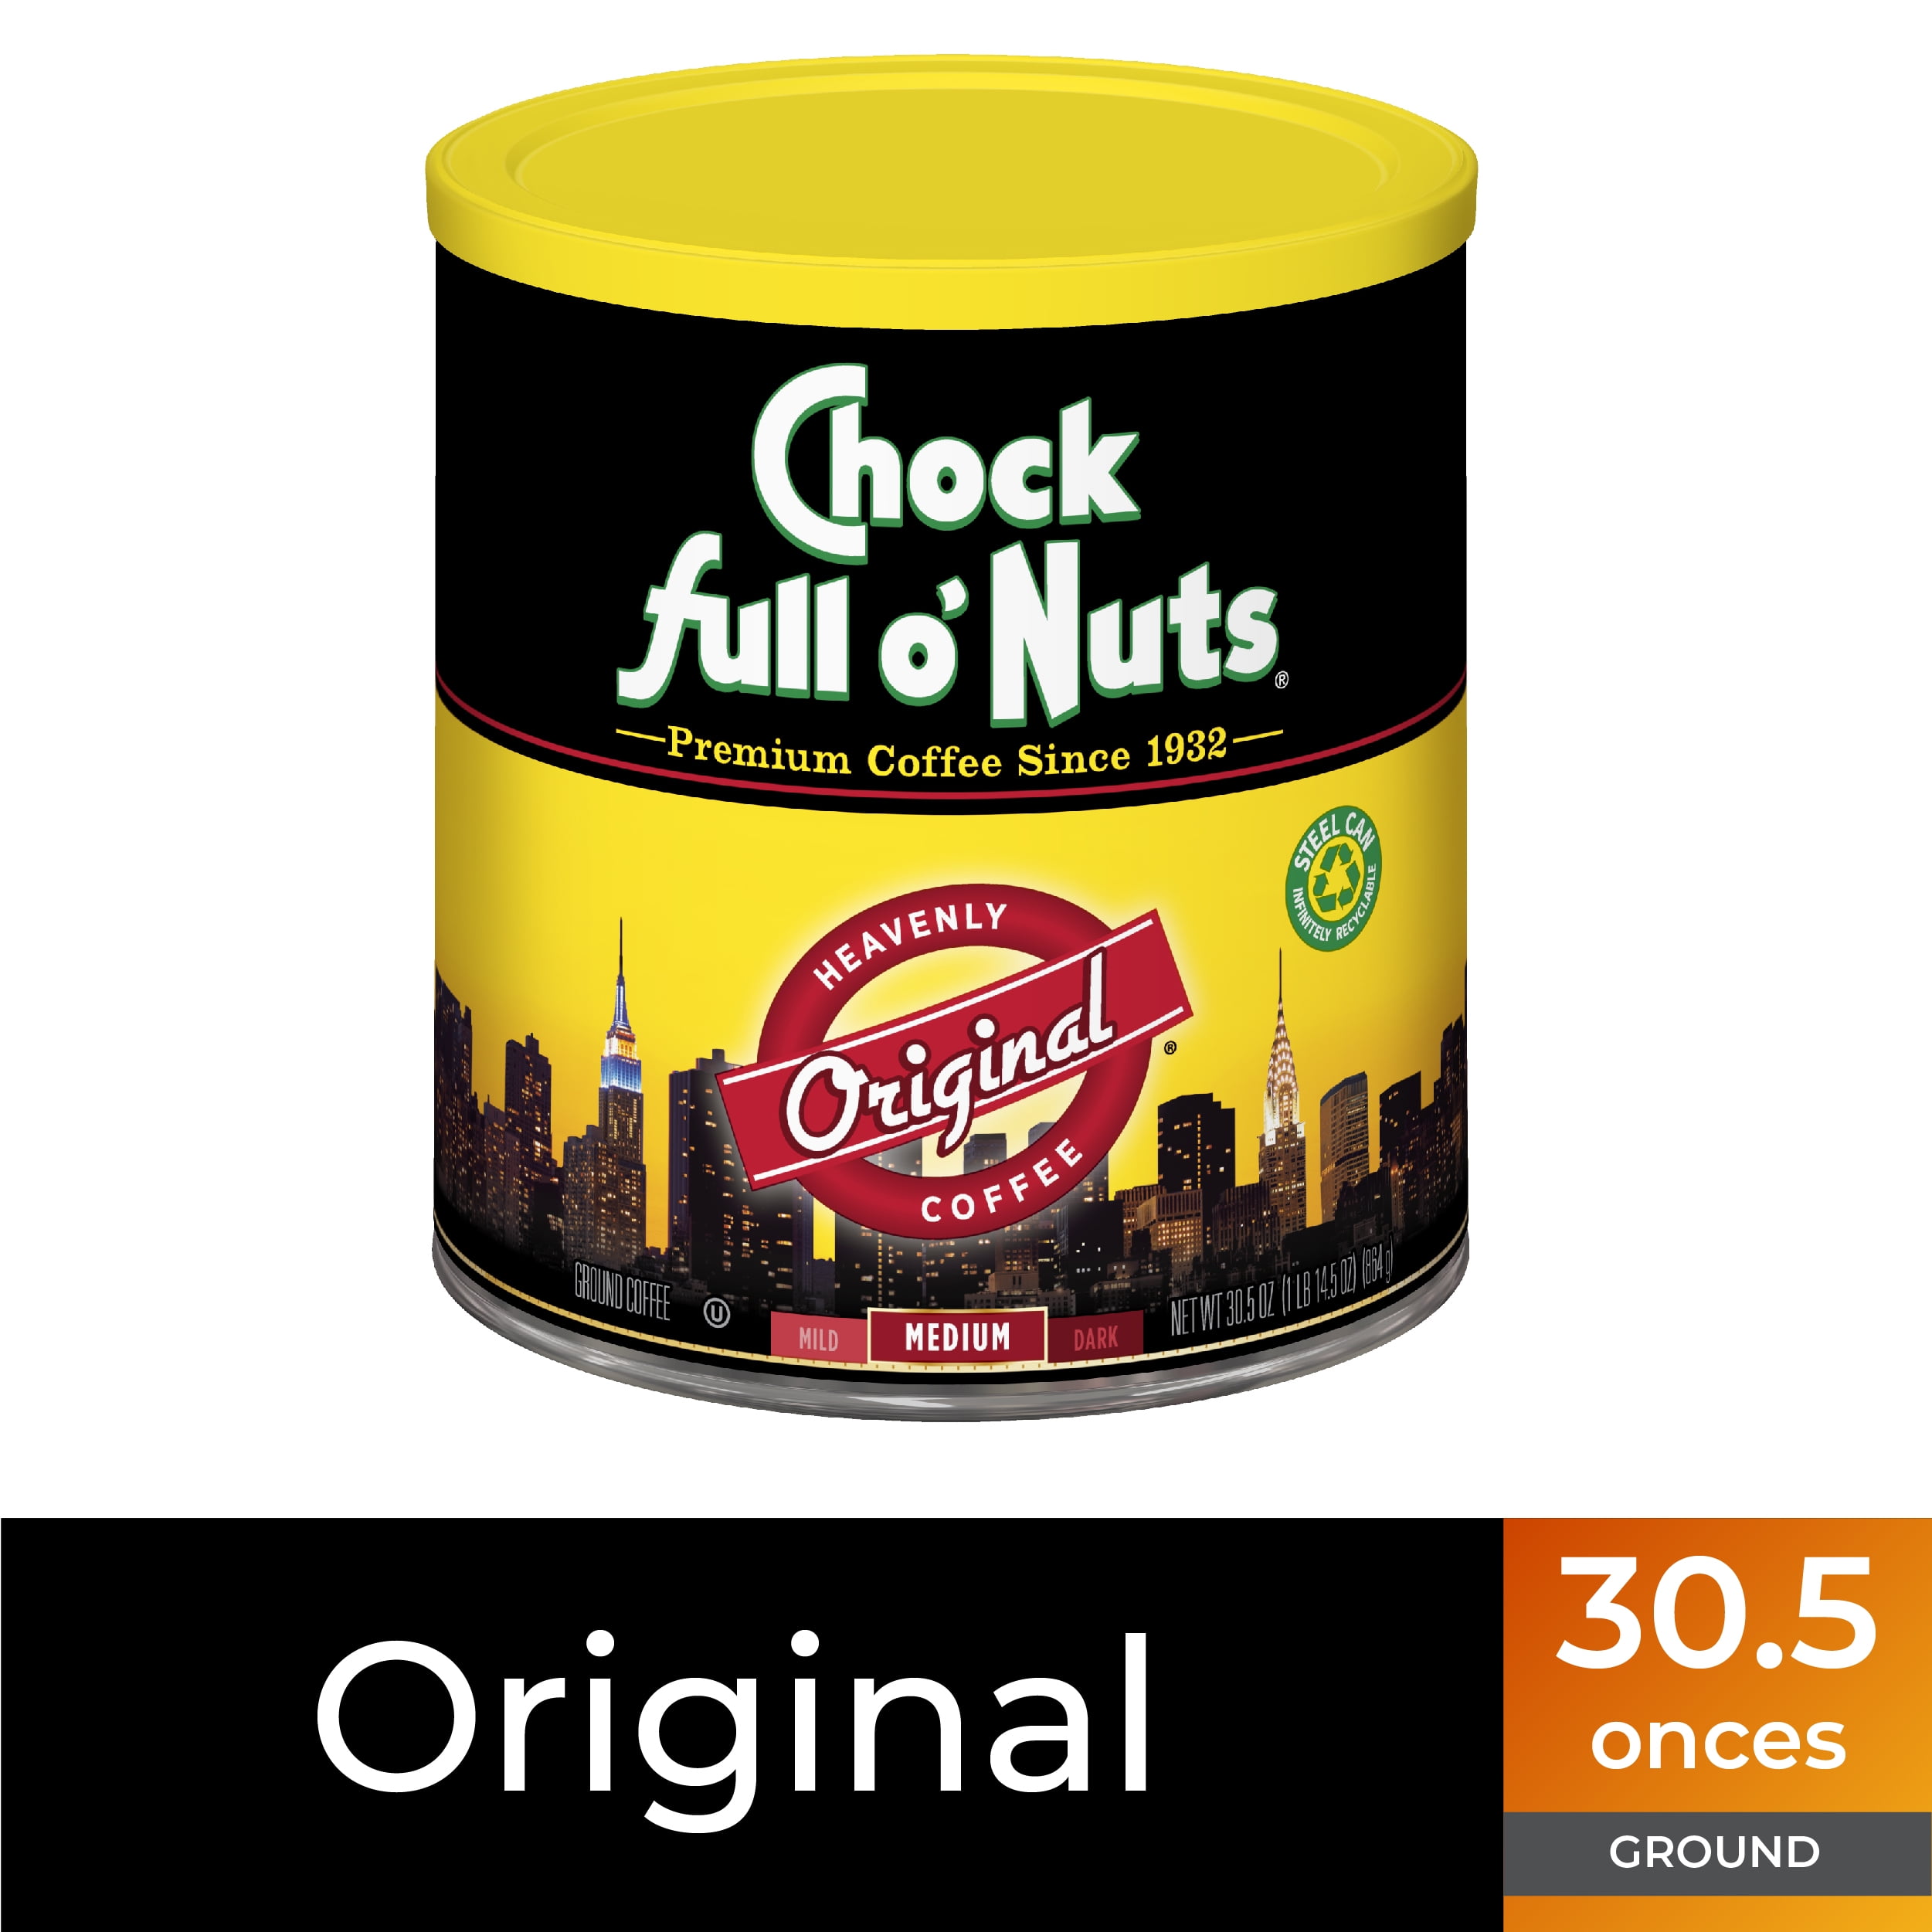 Chock Full oNuts Original Blend Ground Coffee, Medium Roast, 30.5 Oz. Can